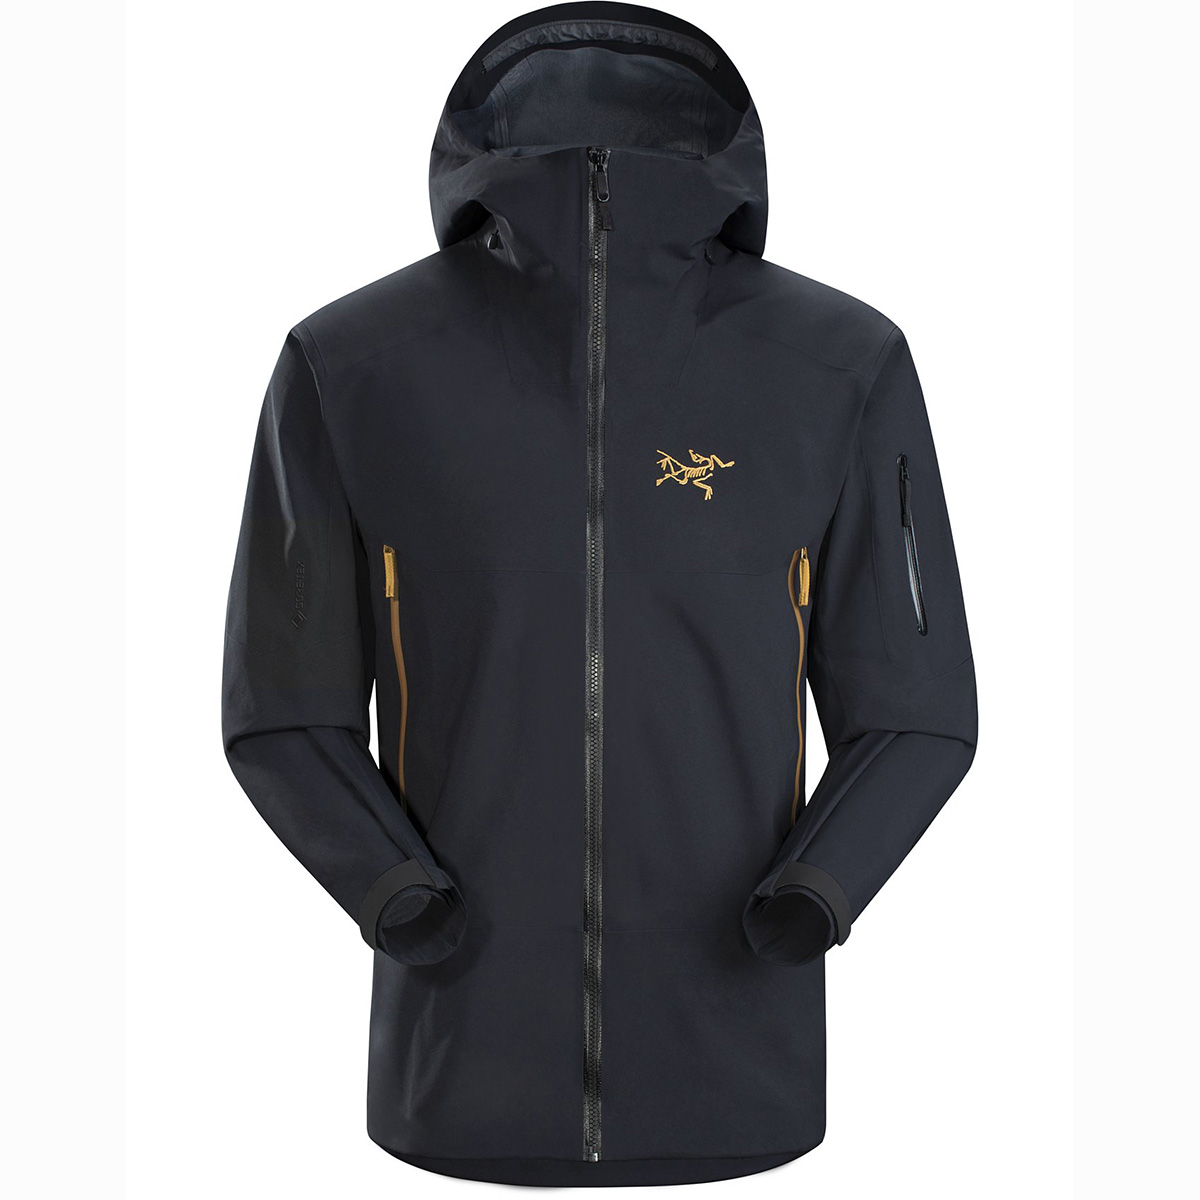 Arc'teryx Sabre AR Jacket, men's, discontinued Fall 2019 model (free ...